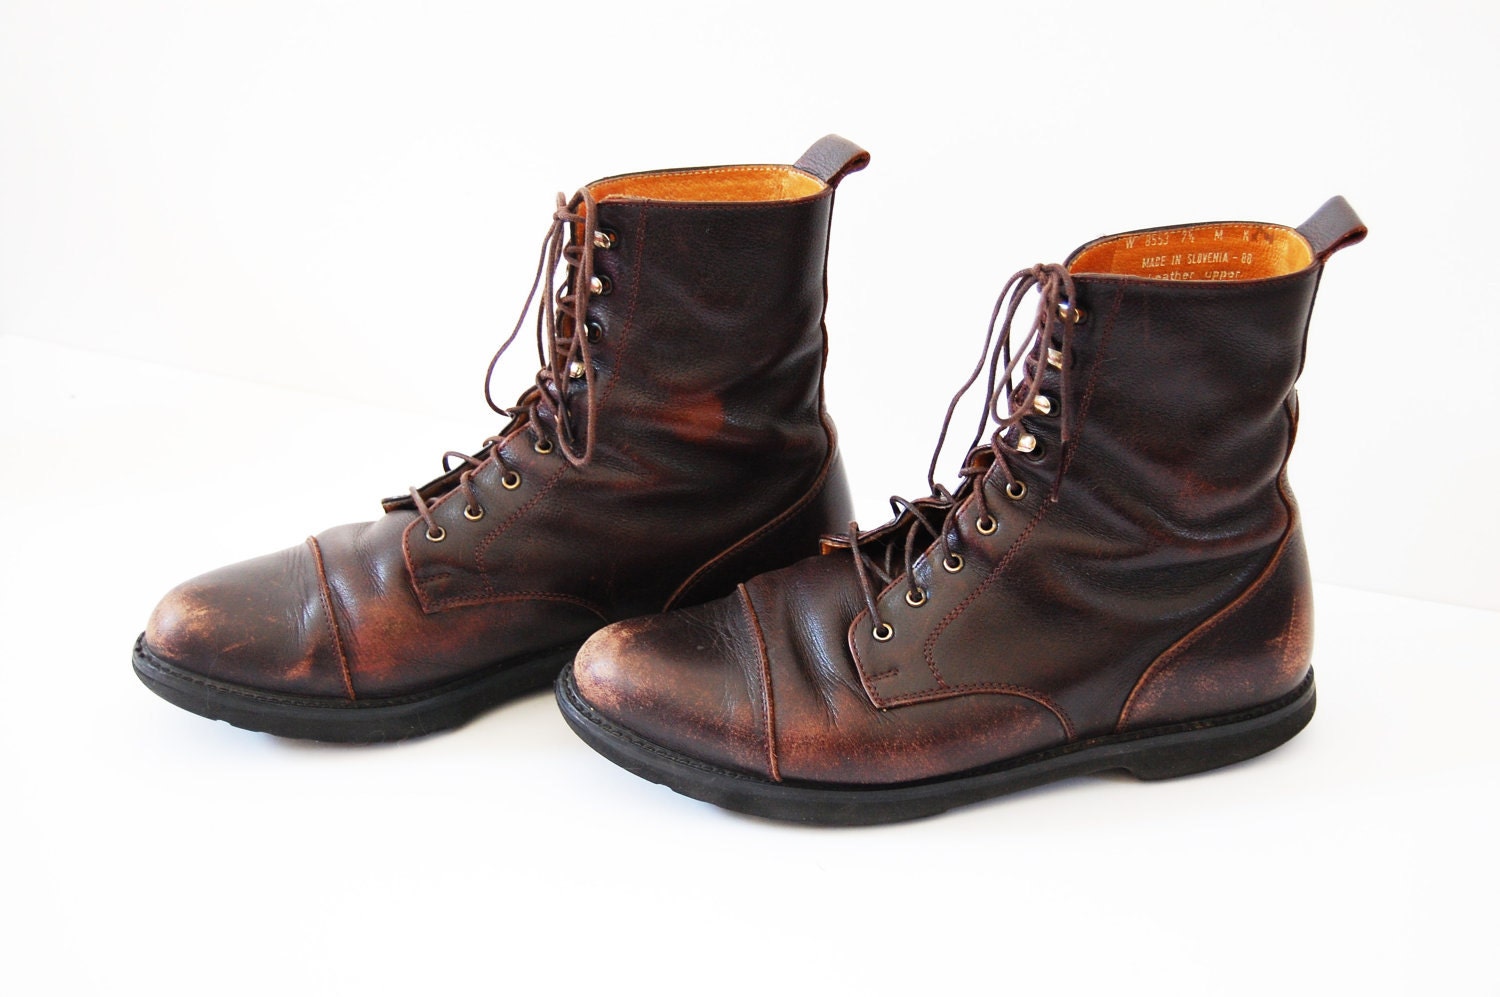 Vintage Traveler's Boots Brown Leather by myfavoritefairytale